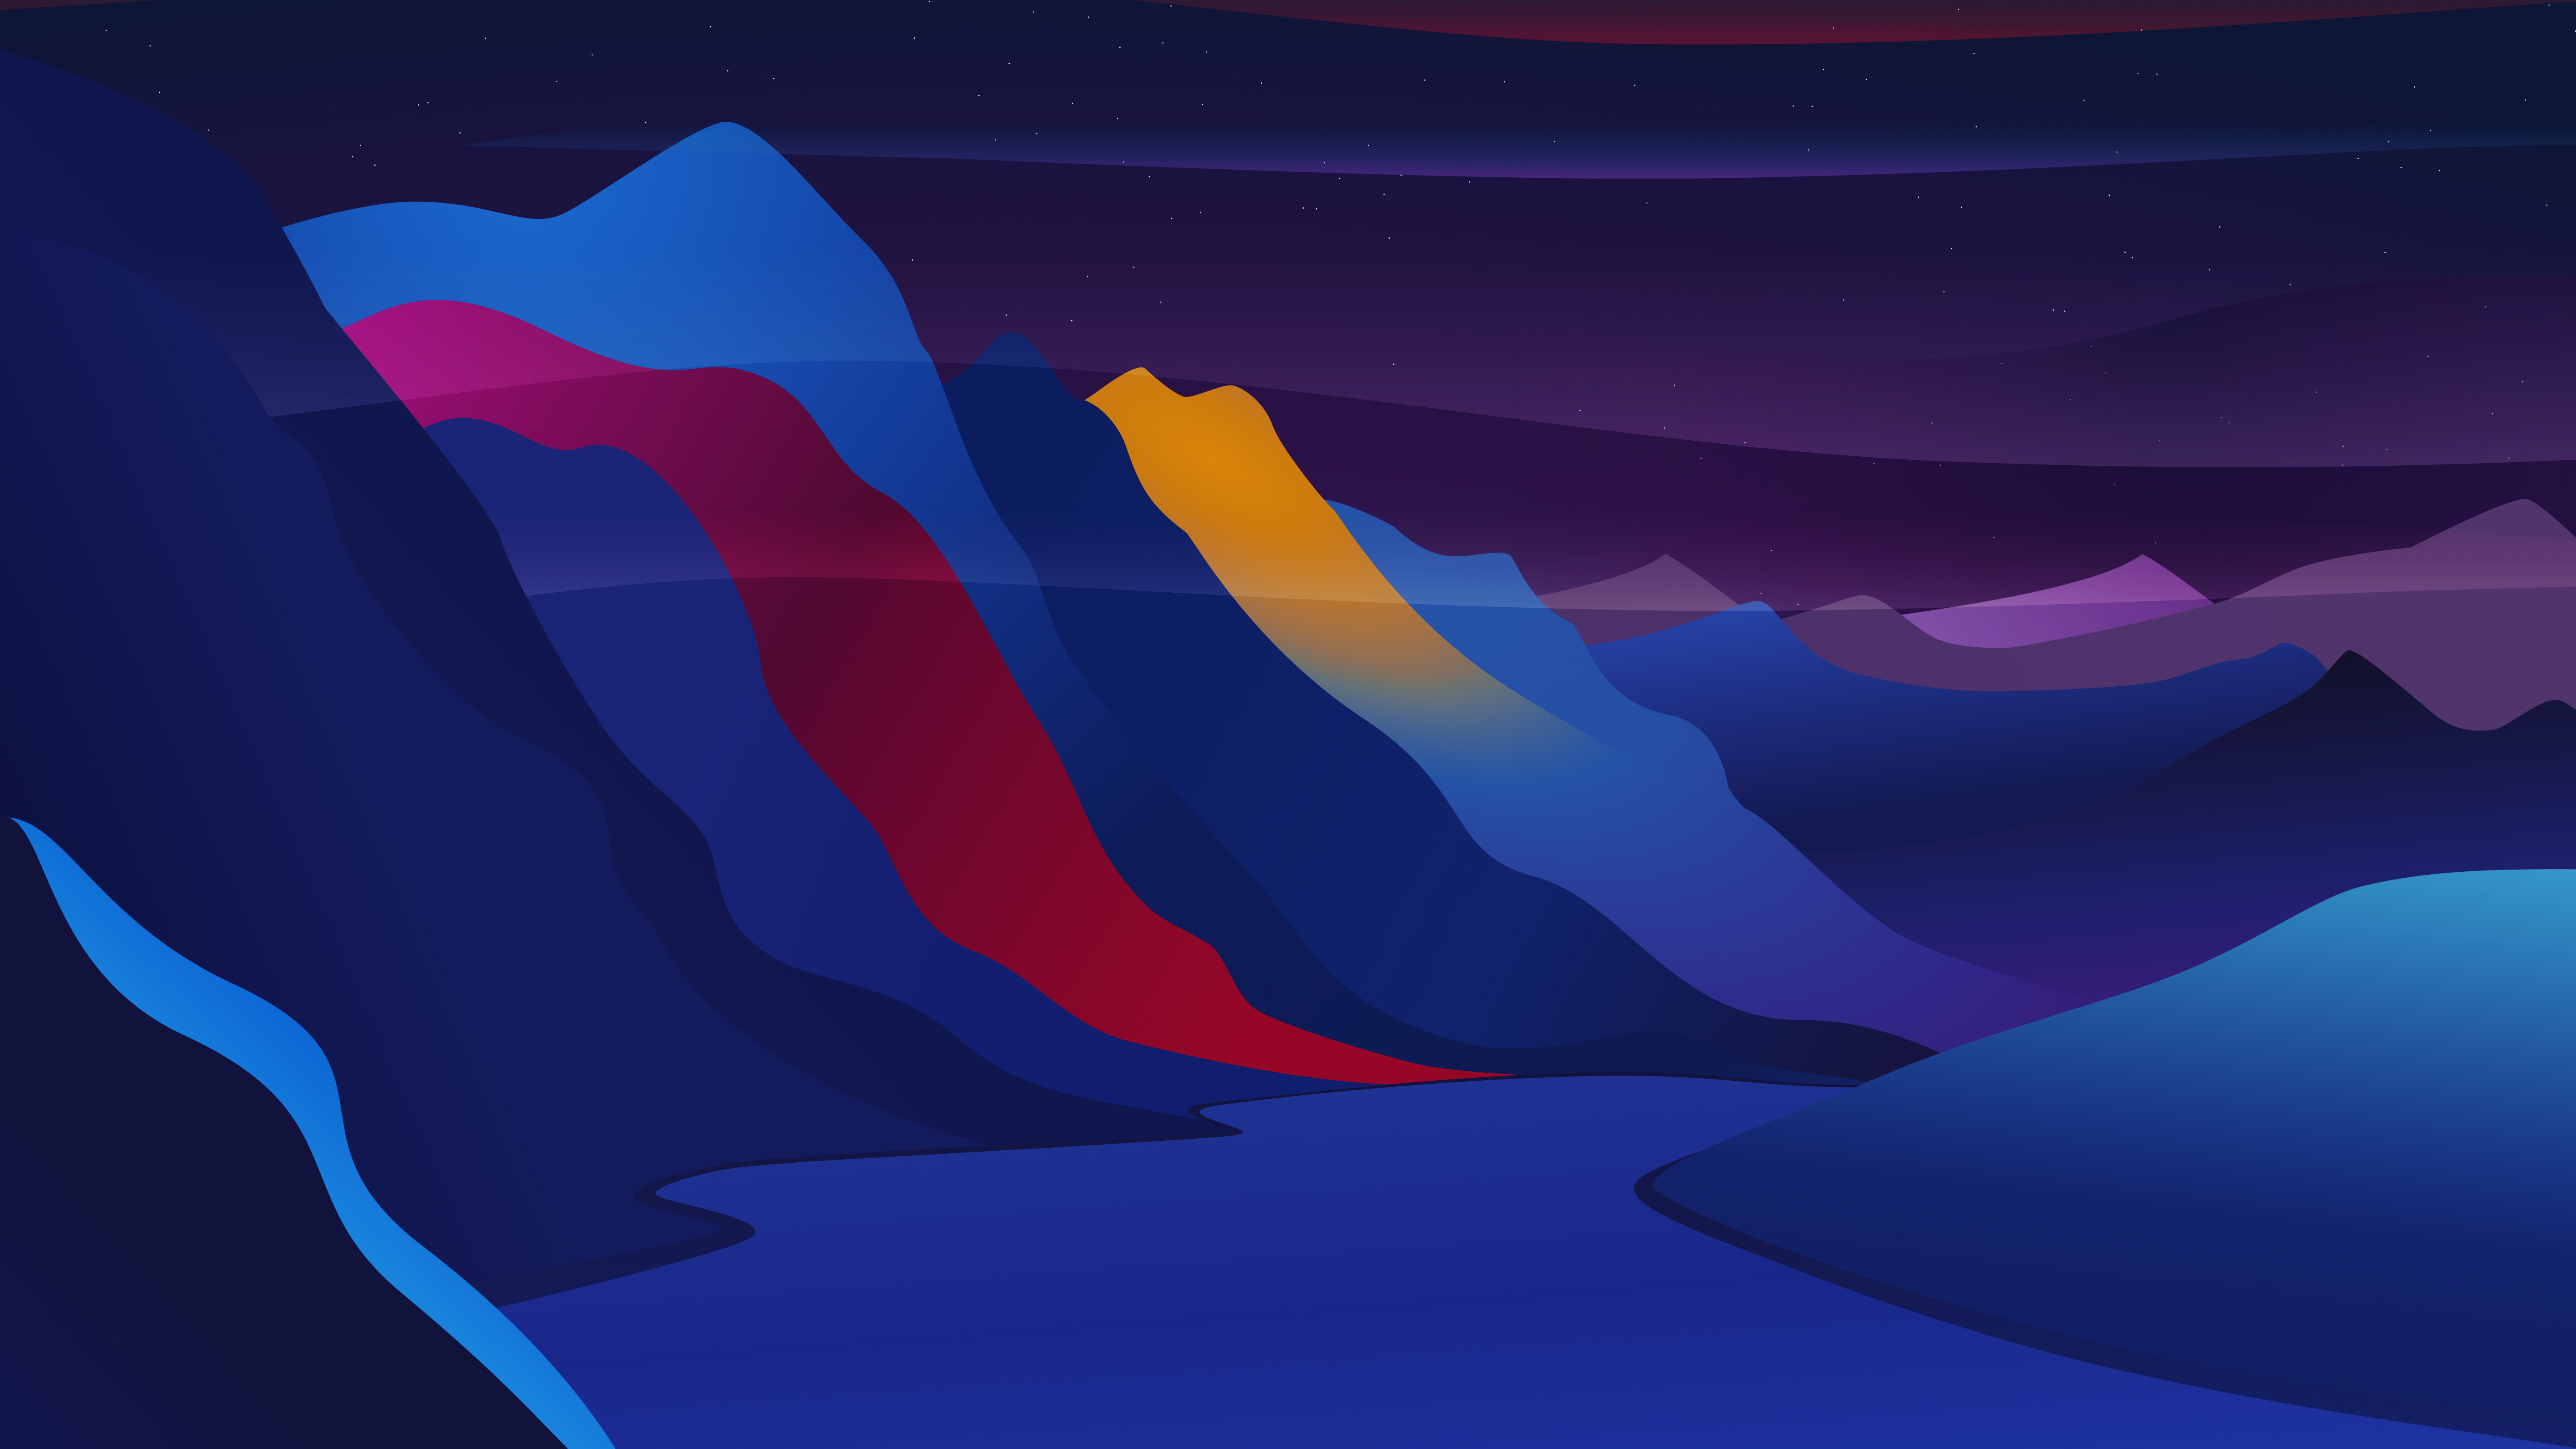 Basic Apple Guy Digital Art Artwork Illustration Landscape River Mountains Valley Colorful Night Nat 6000x3376